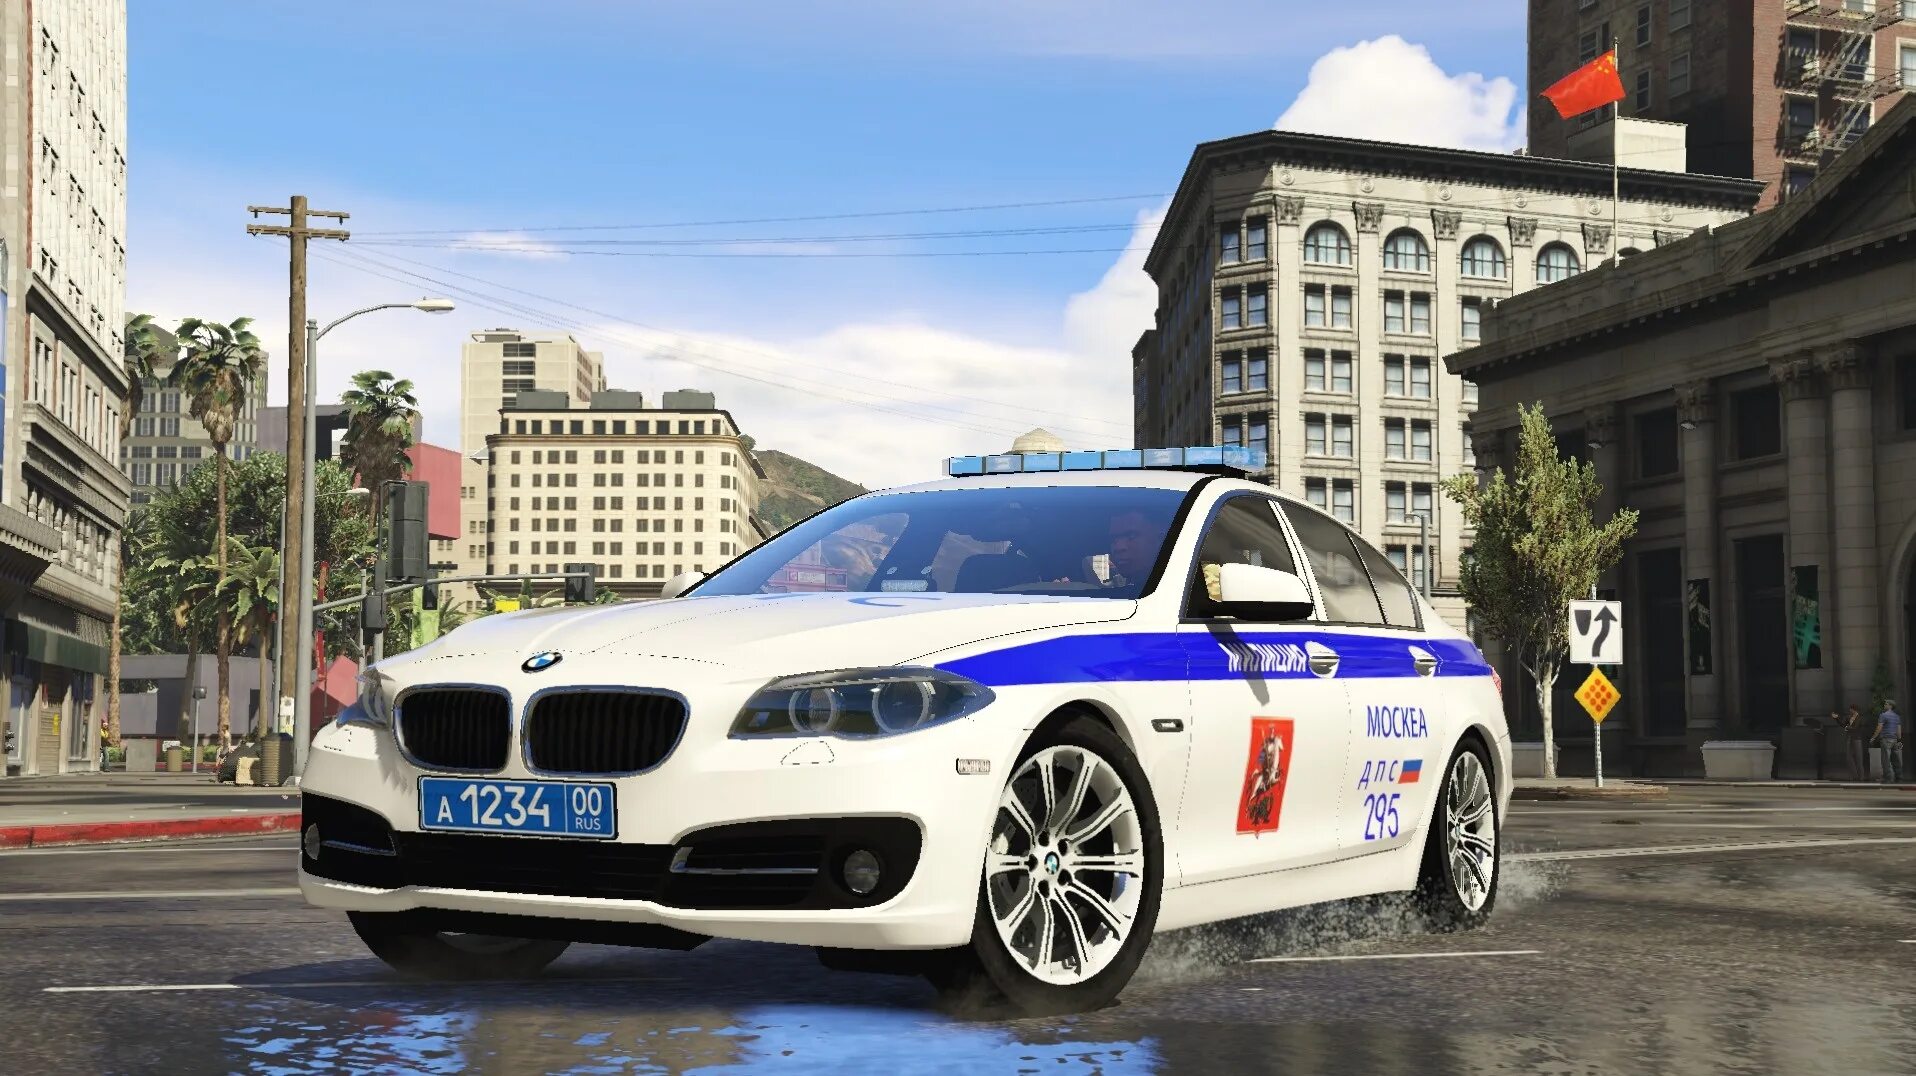 Police BMW GTA 5. GTA 5 ДПС. ГТА 5 ГТА 4 полиция. Полицейский джип ГТА 5. Чит машина russia